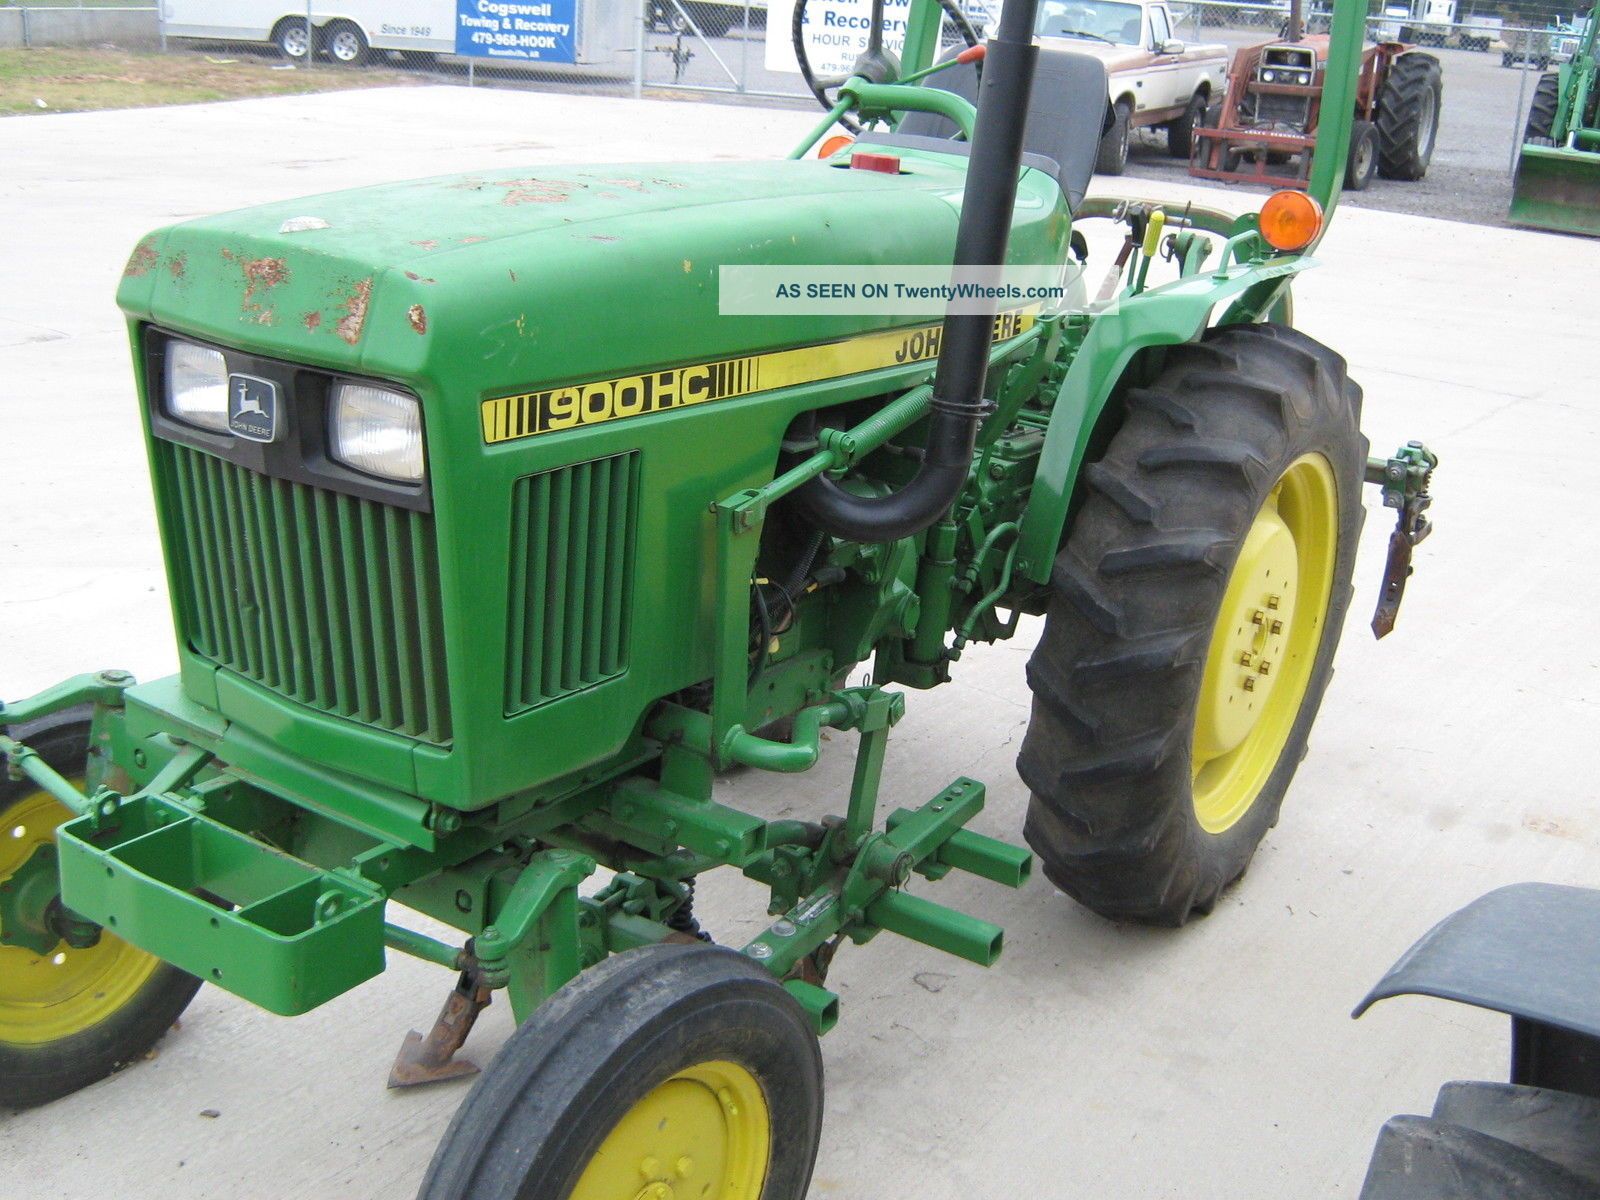 1989 John Deere 900hc Tractor 2wd 25hp Rops Cultivators ...